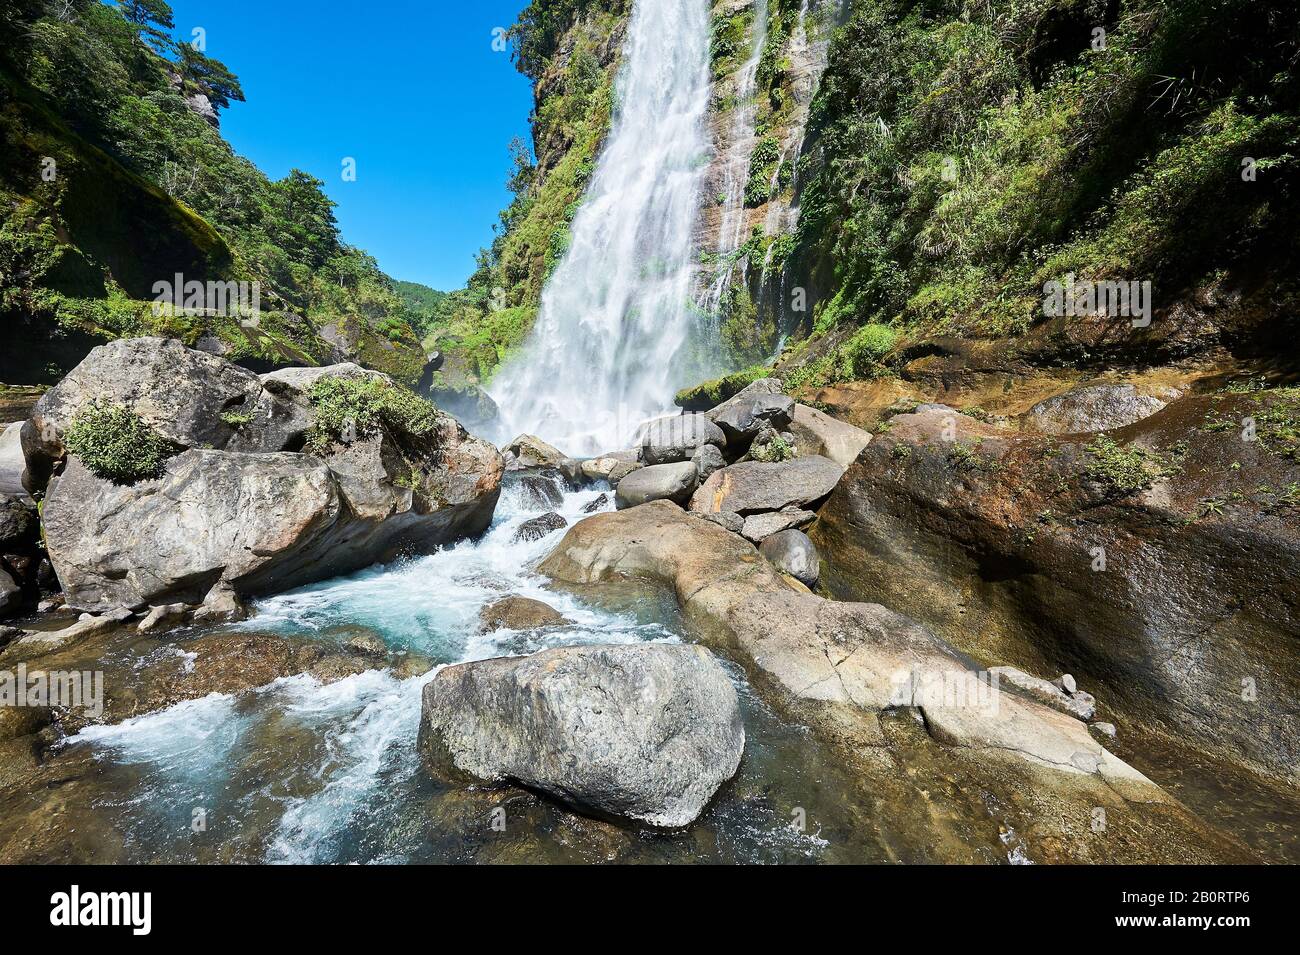 Sagada, Mountain Province, Philippines: Scenic wide angle view of Bomod-ok Waterfalls, Banga-an, surrounded by lush vegetation Stock Photo